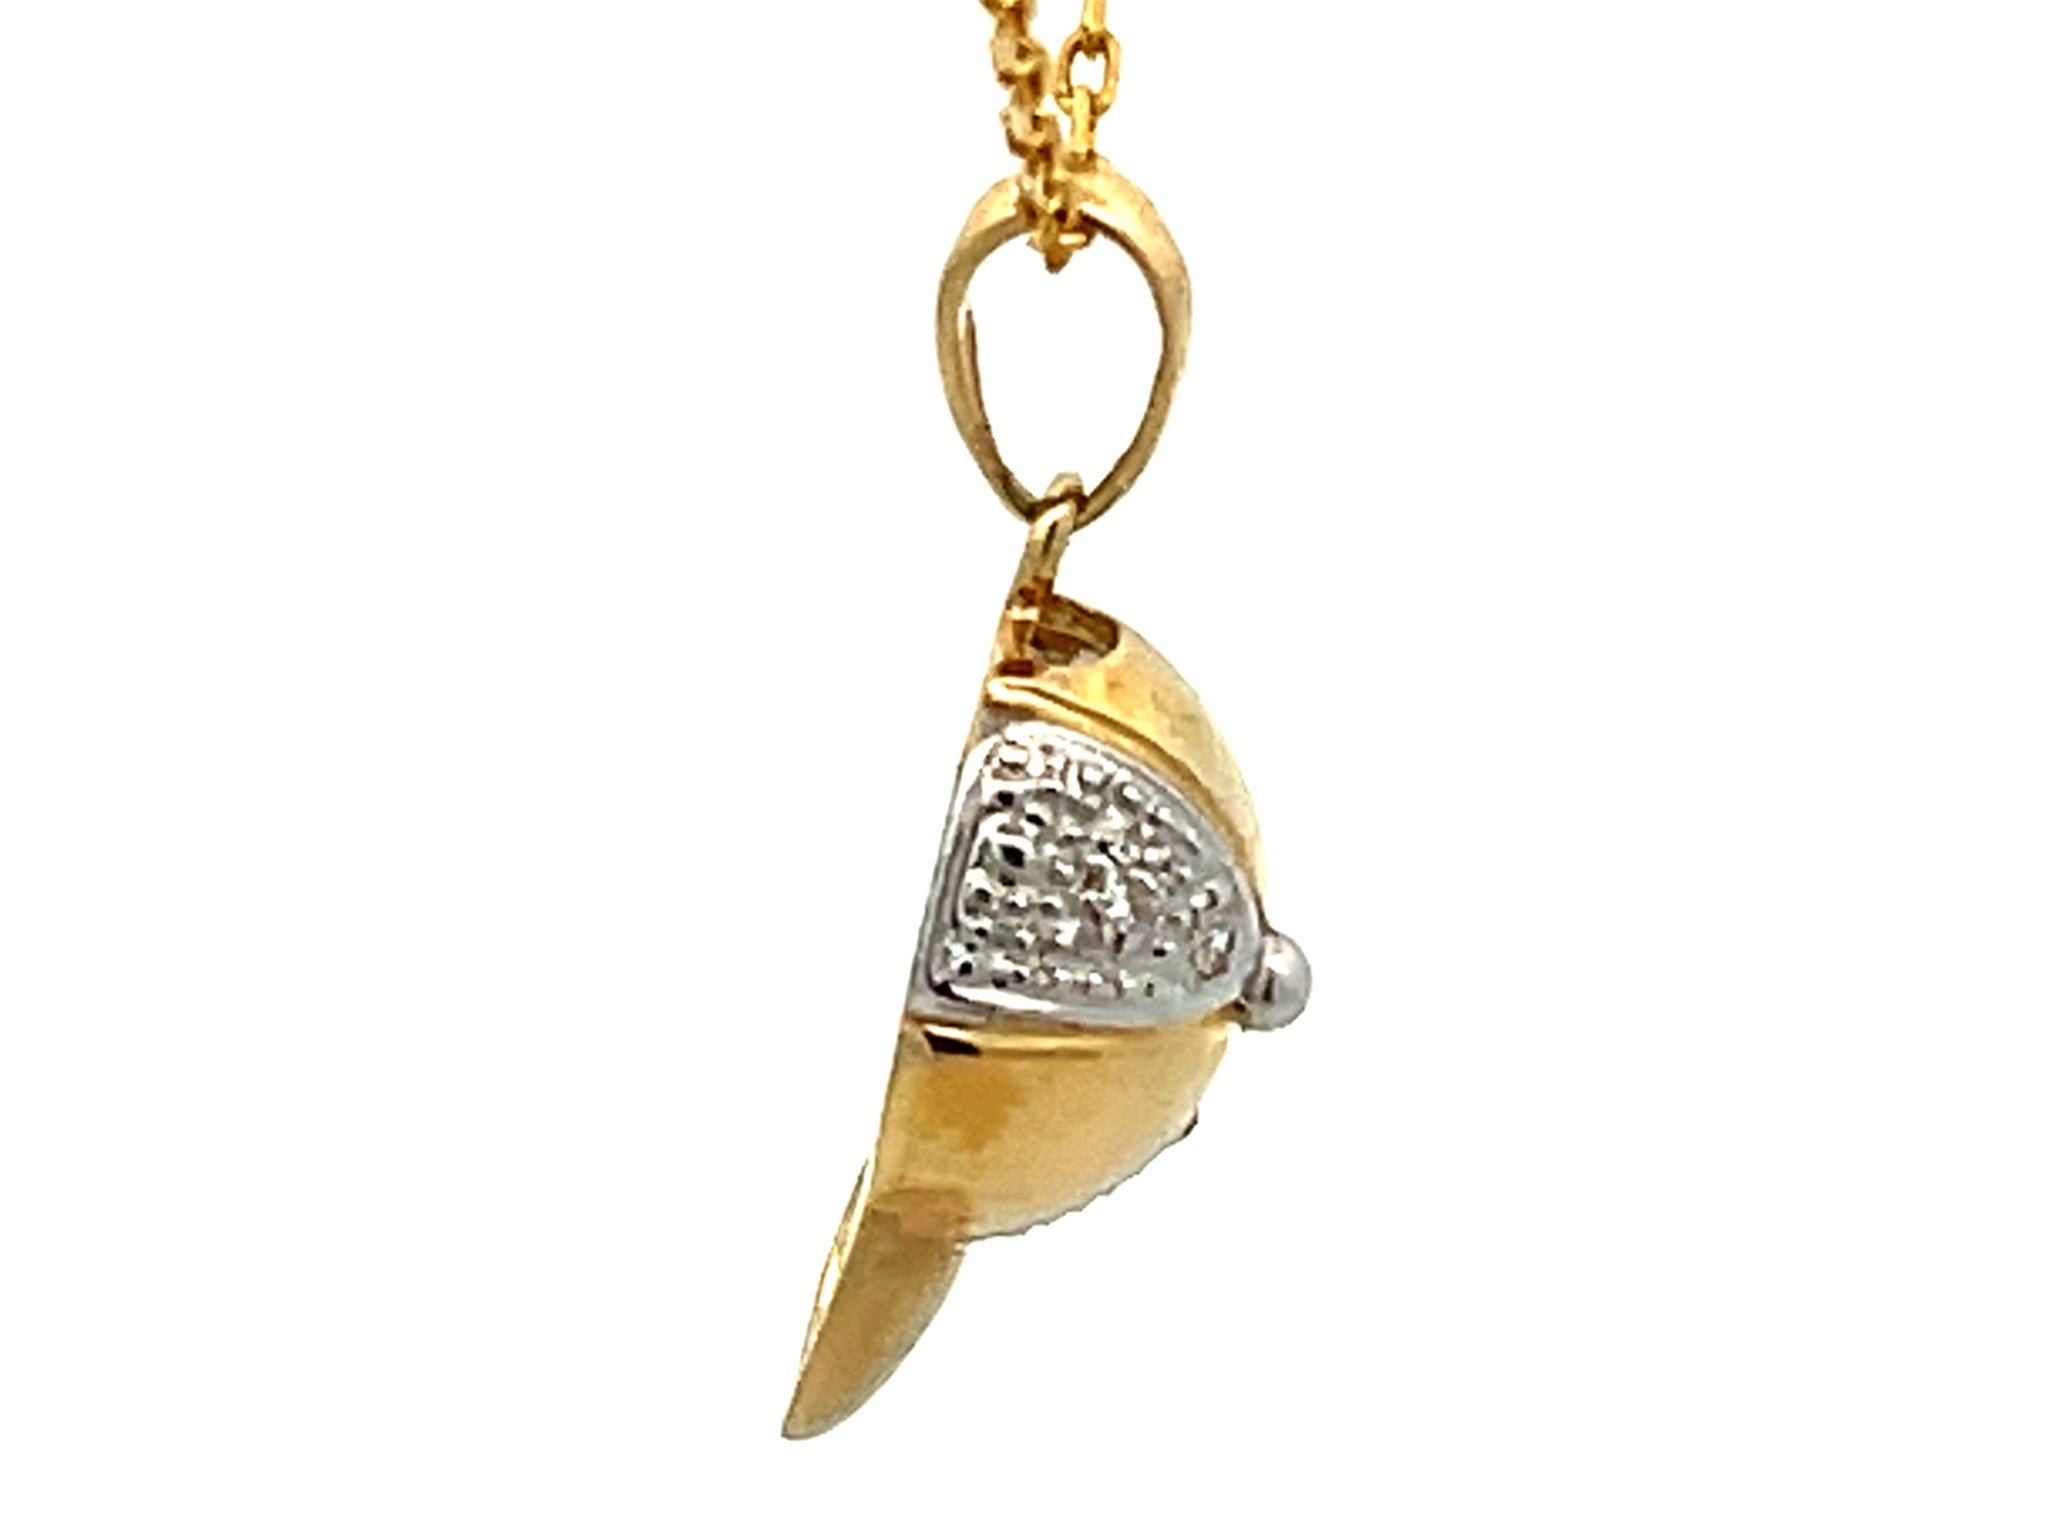 Solid Gold Baseball Hat Diamond Pendant Necklace